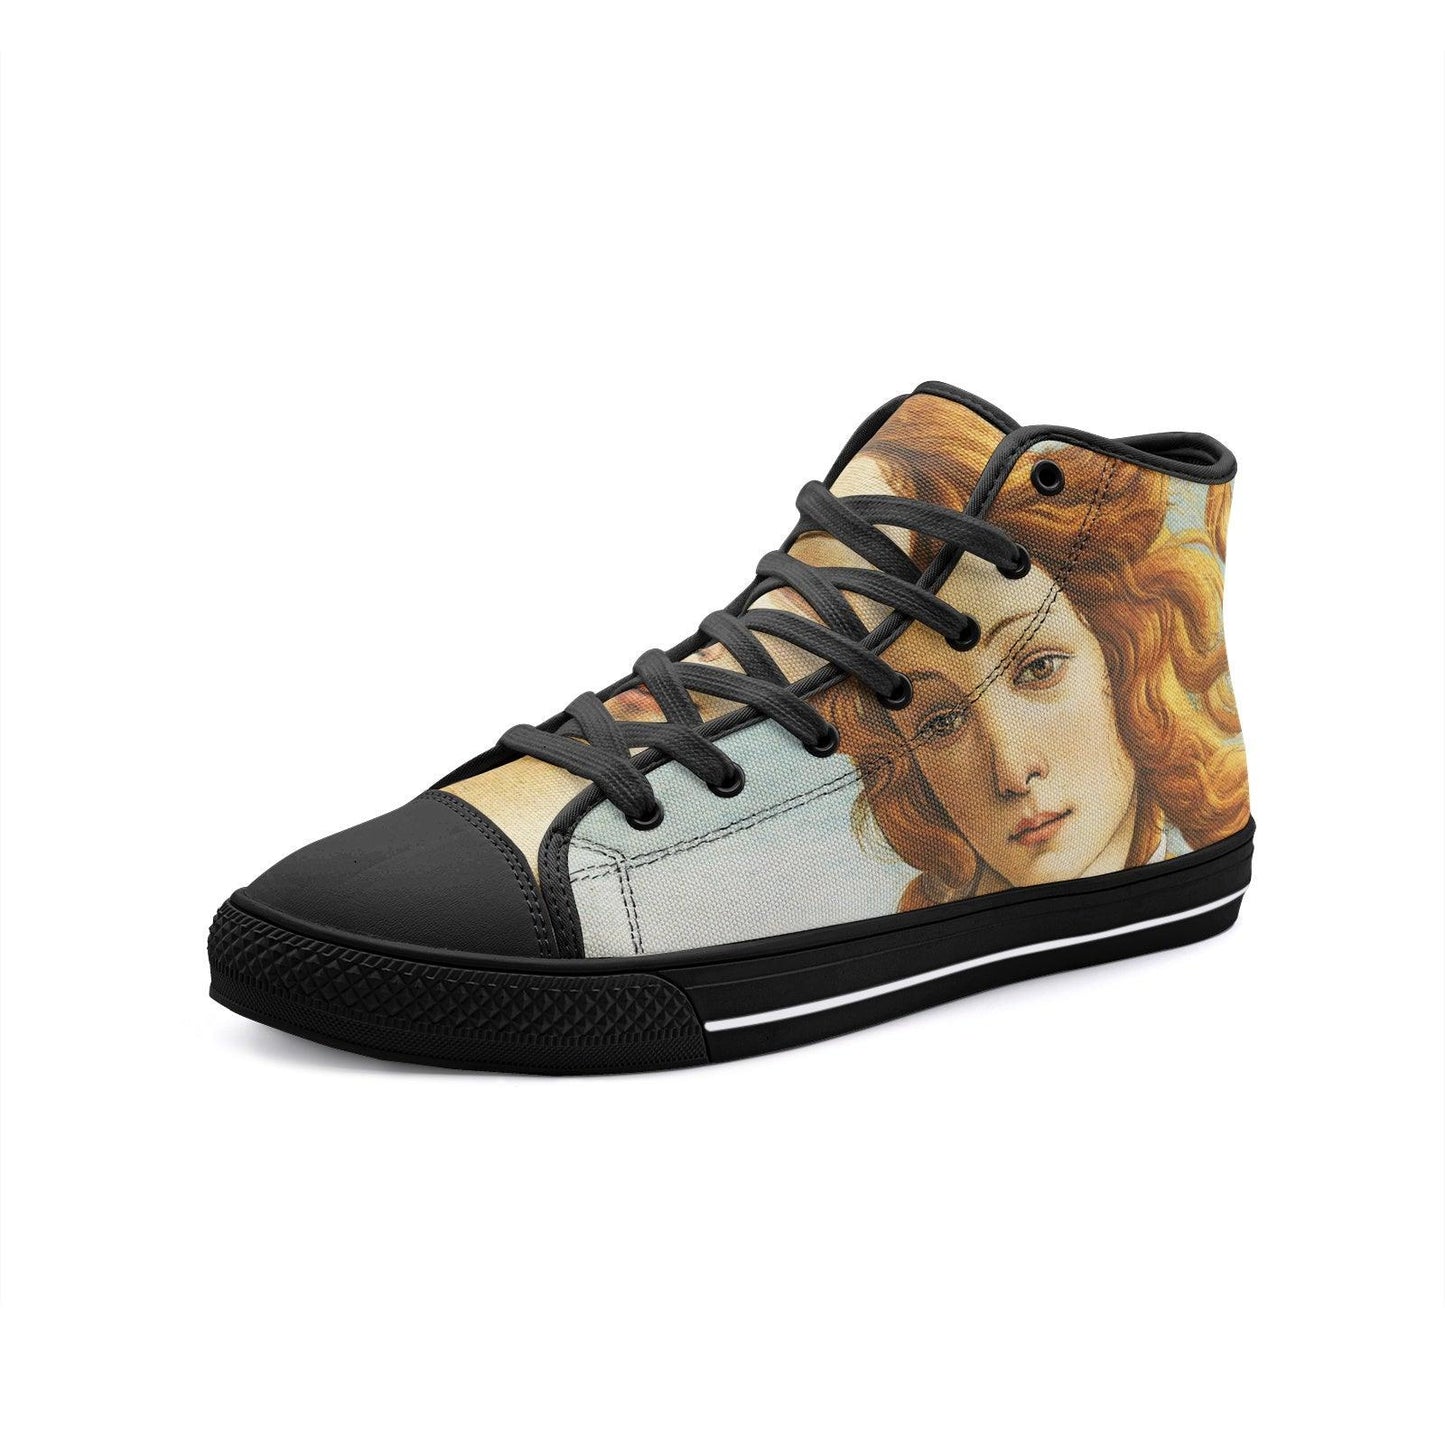 Birth of Venus Sandro Botticelli - Freaky Shoes®